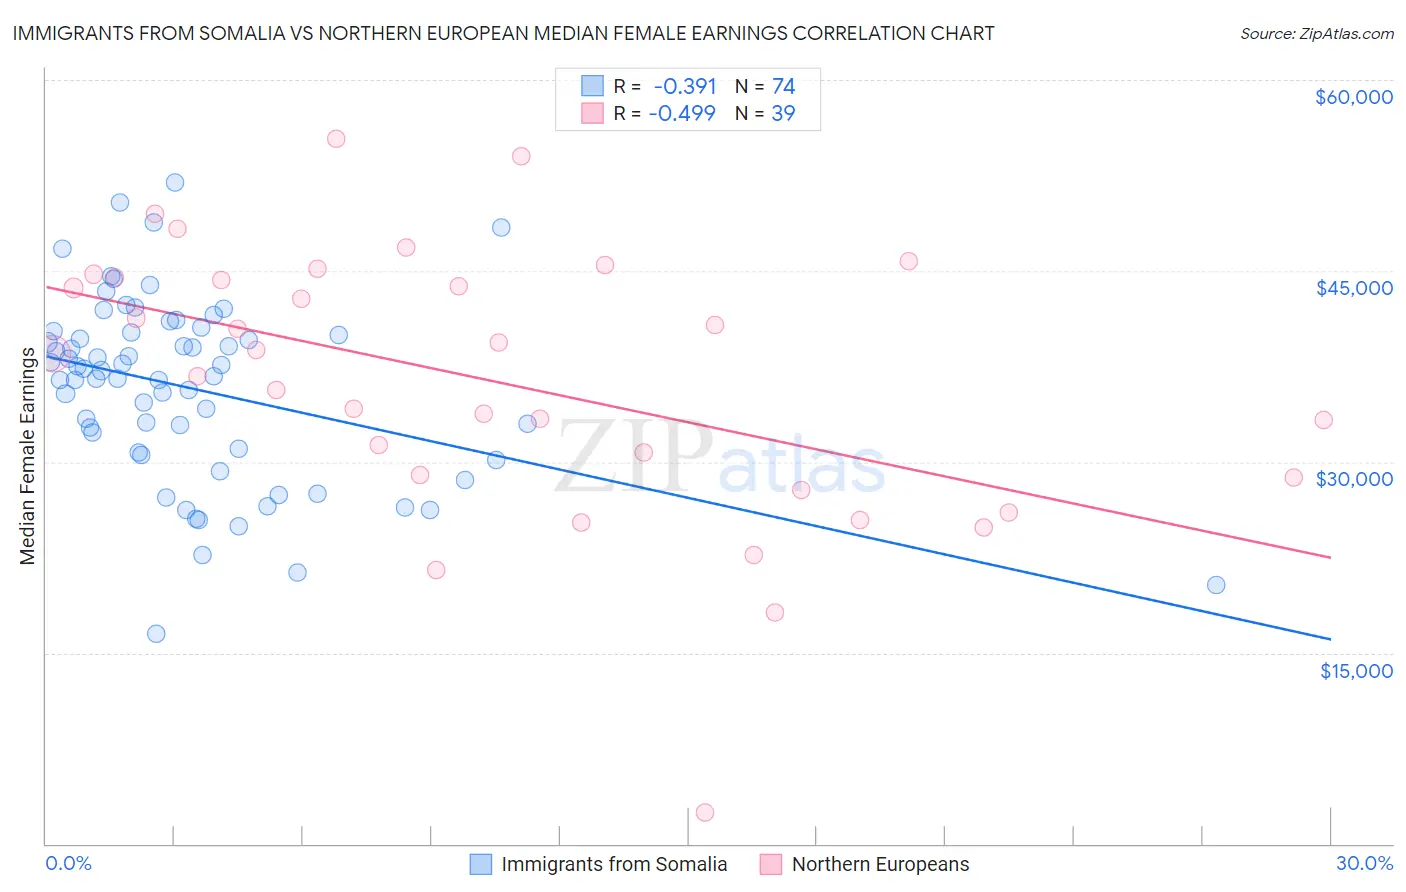 Immigrants from Somalia vs Northern European Median Female Earnings